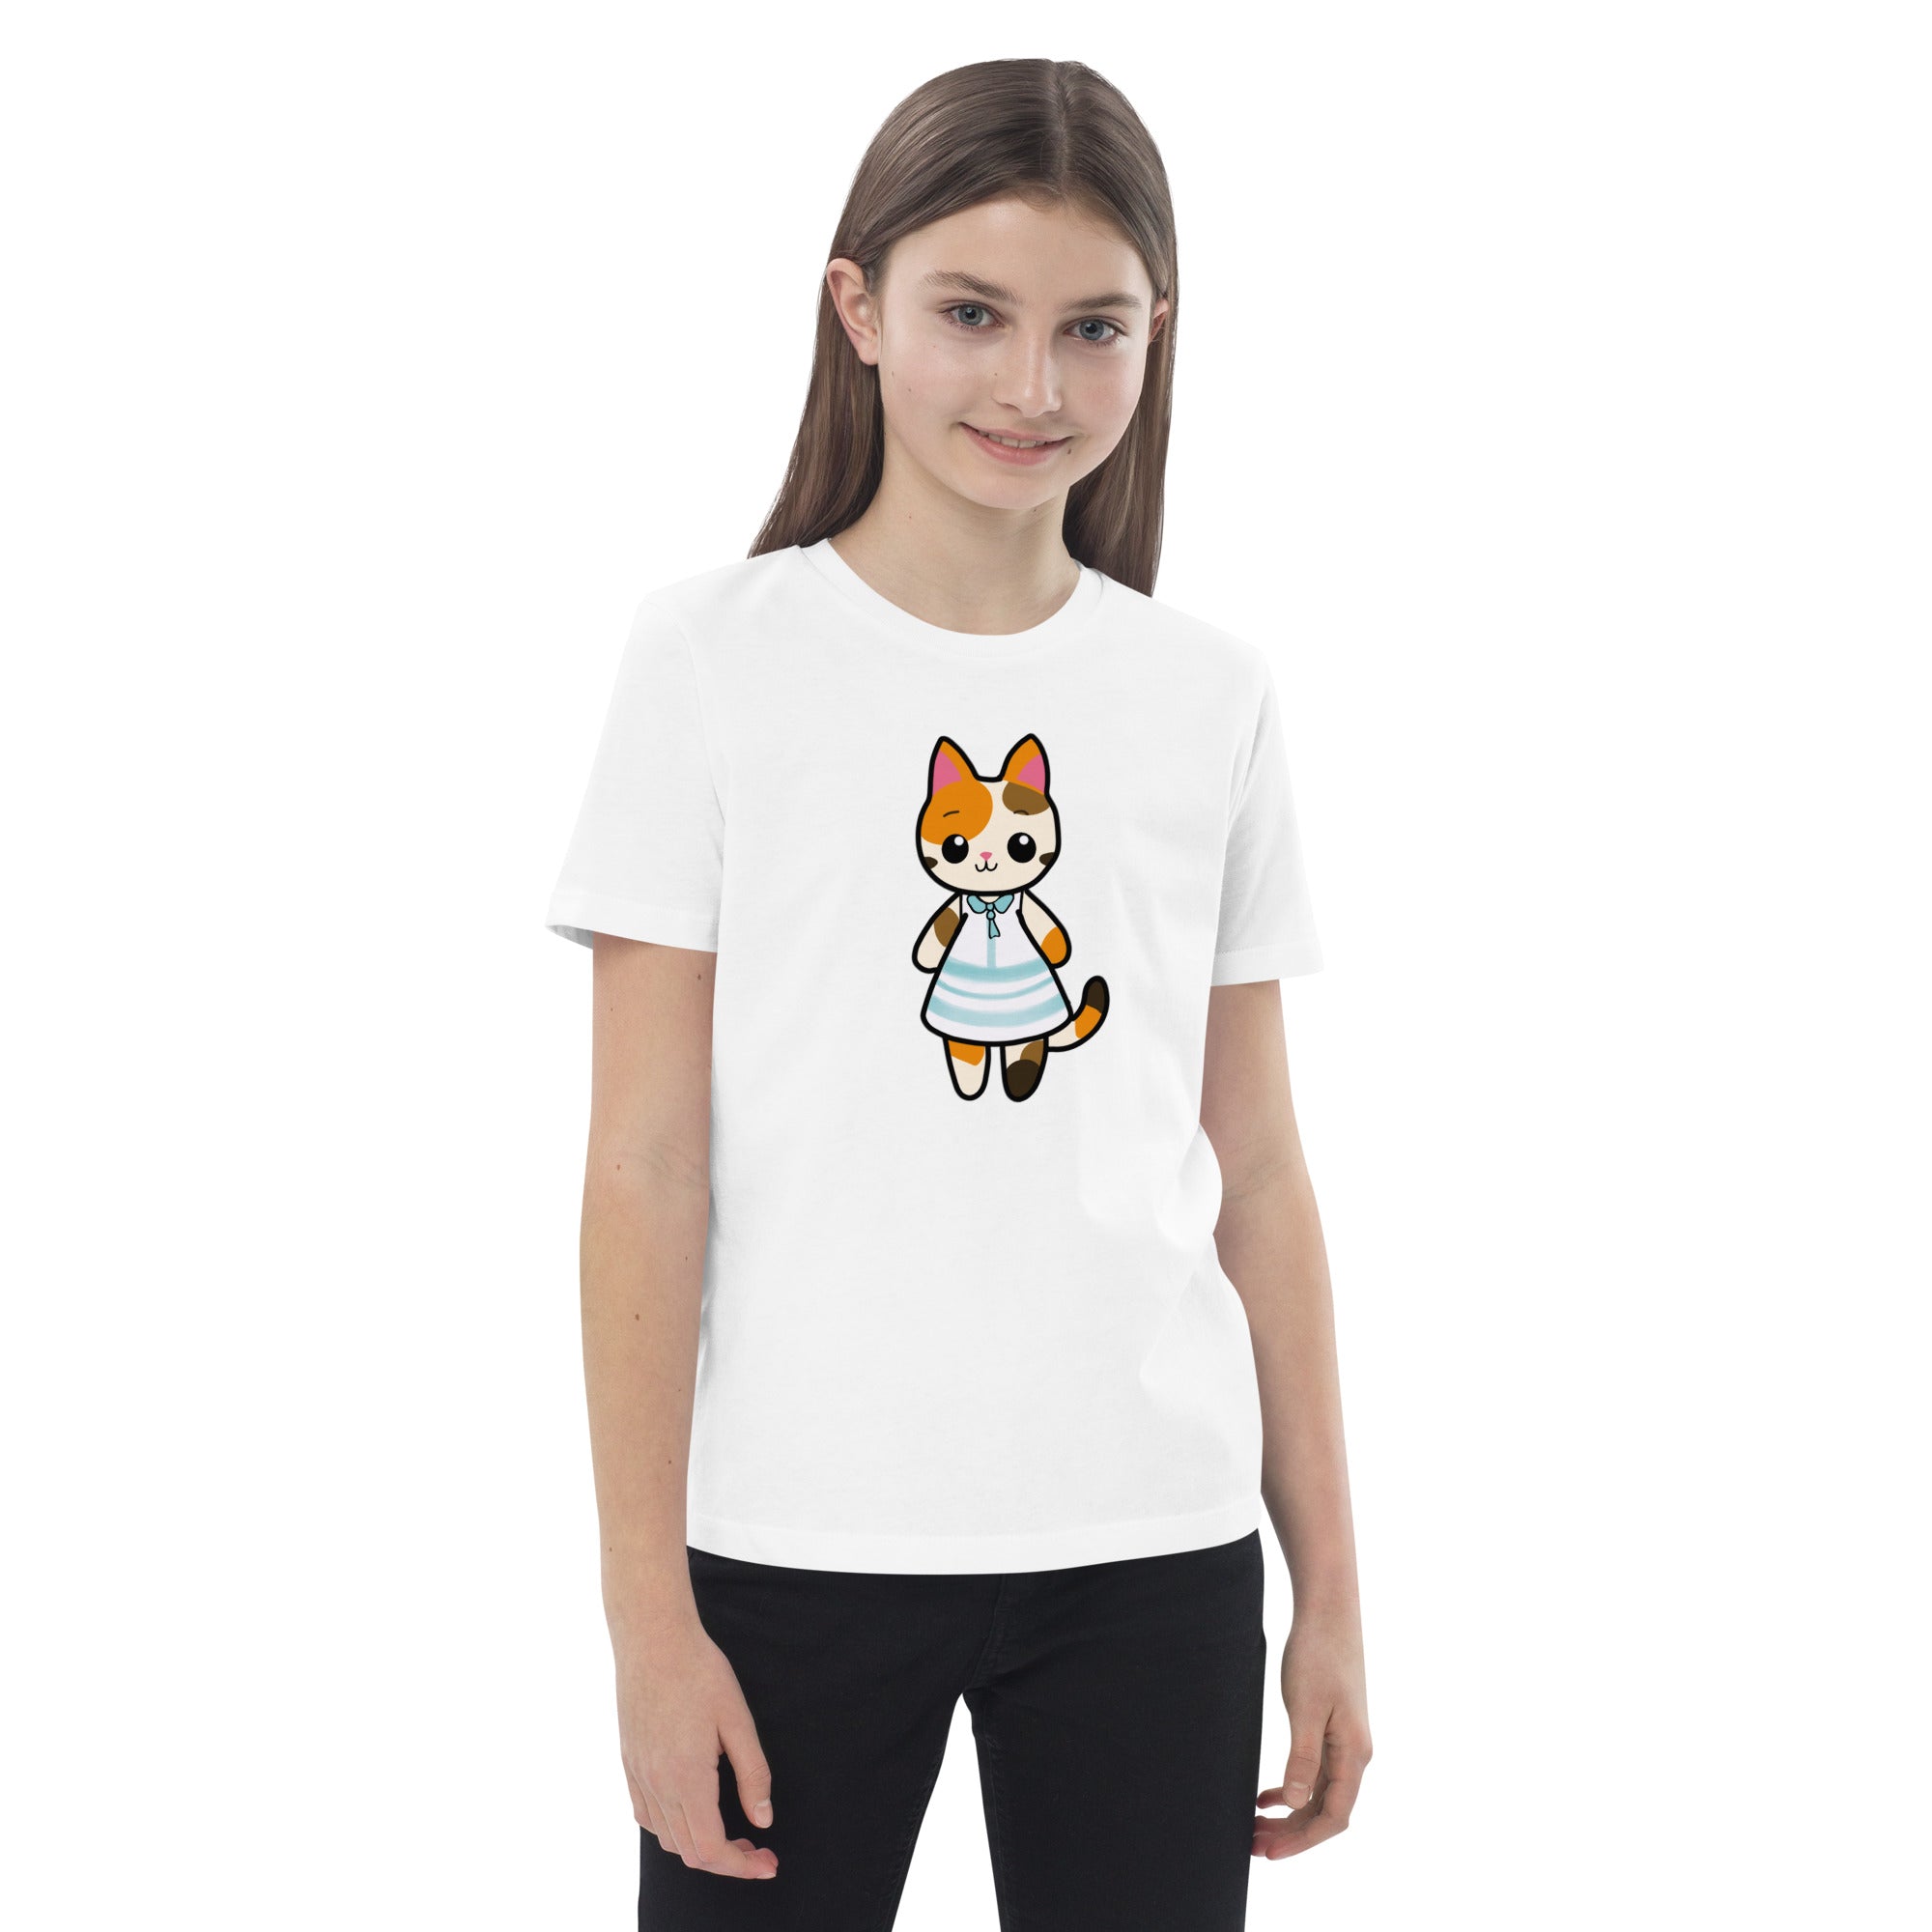 Calico Cat in a Sun Dress Organic Cotton Kids' T-shirt